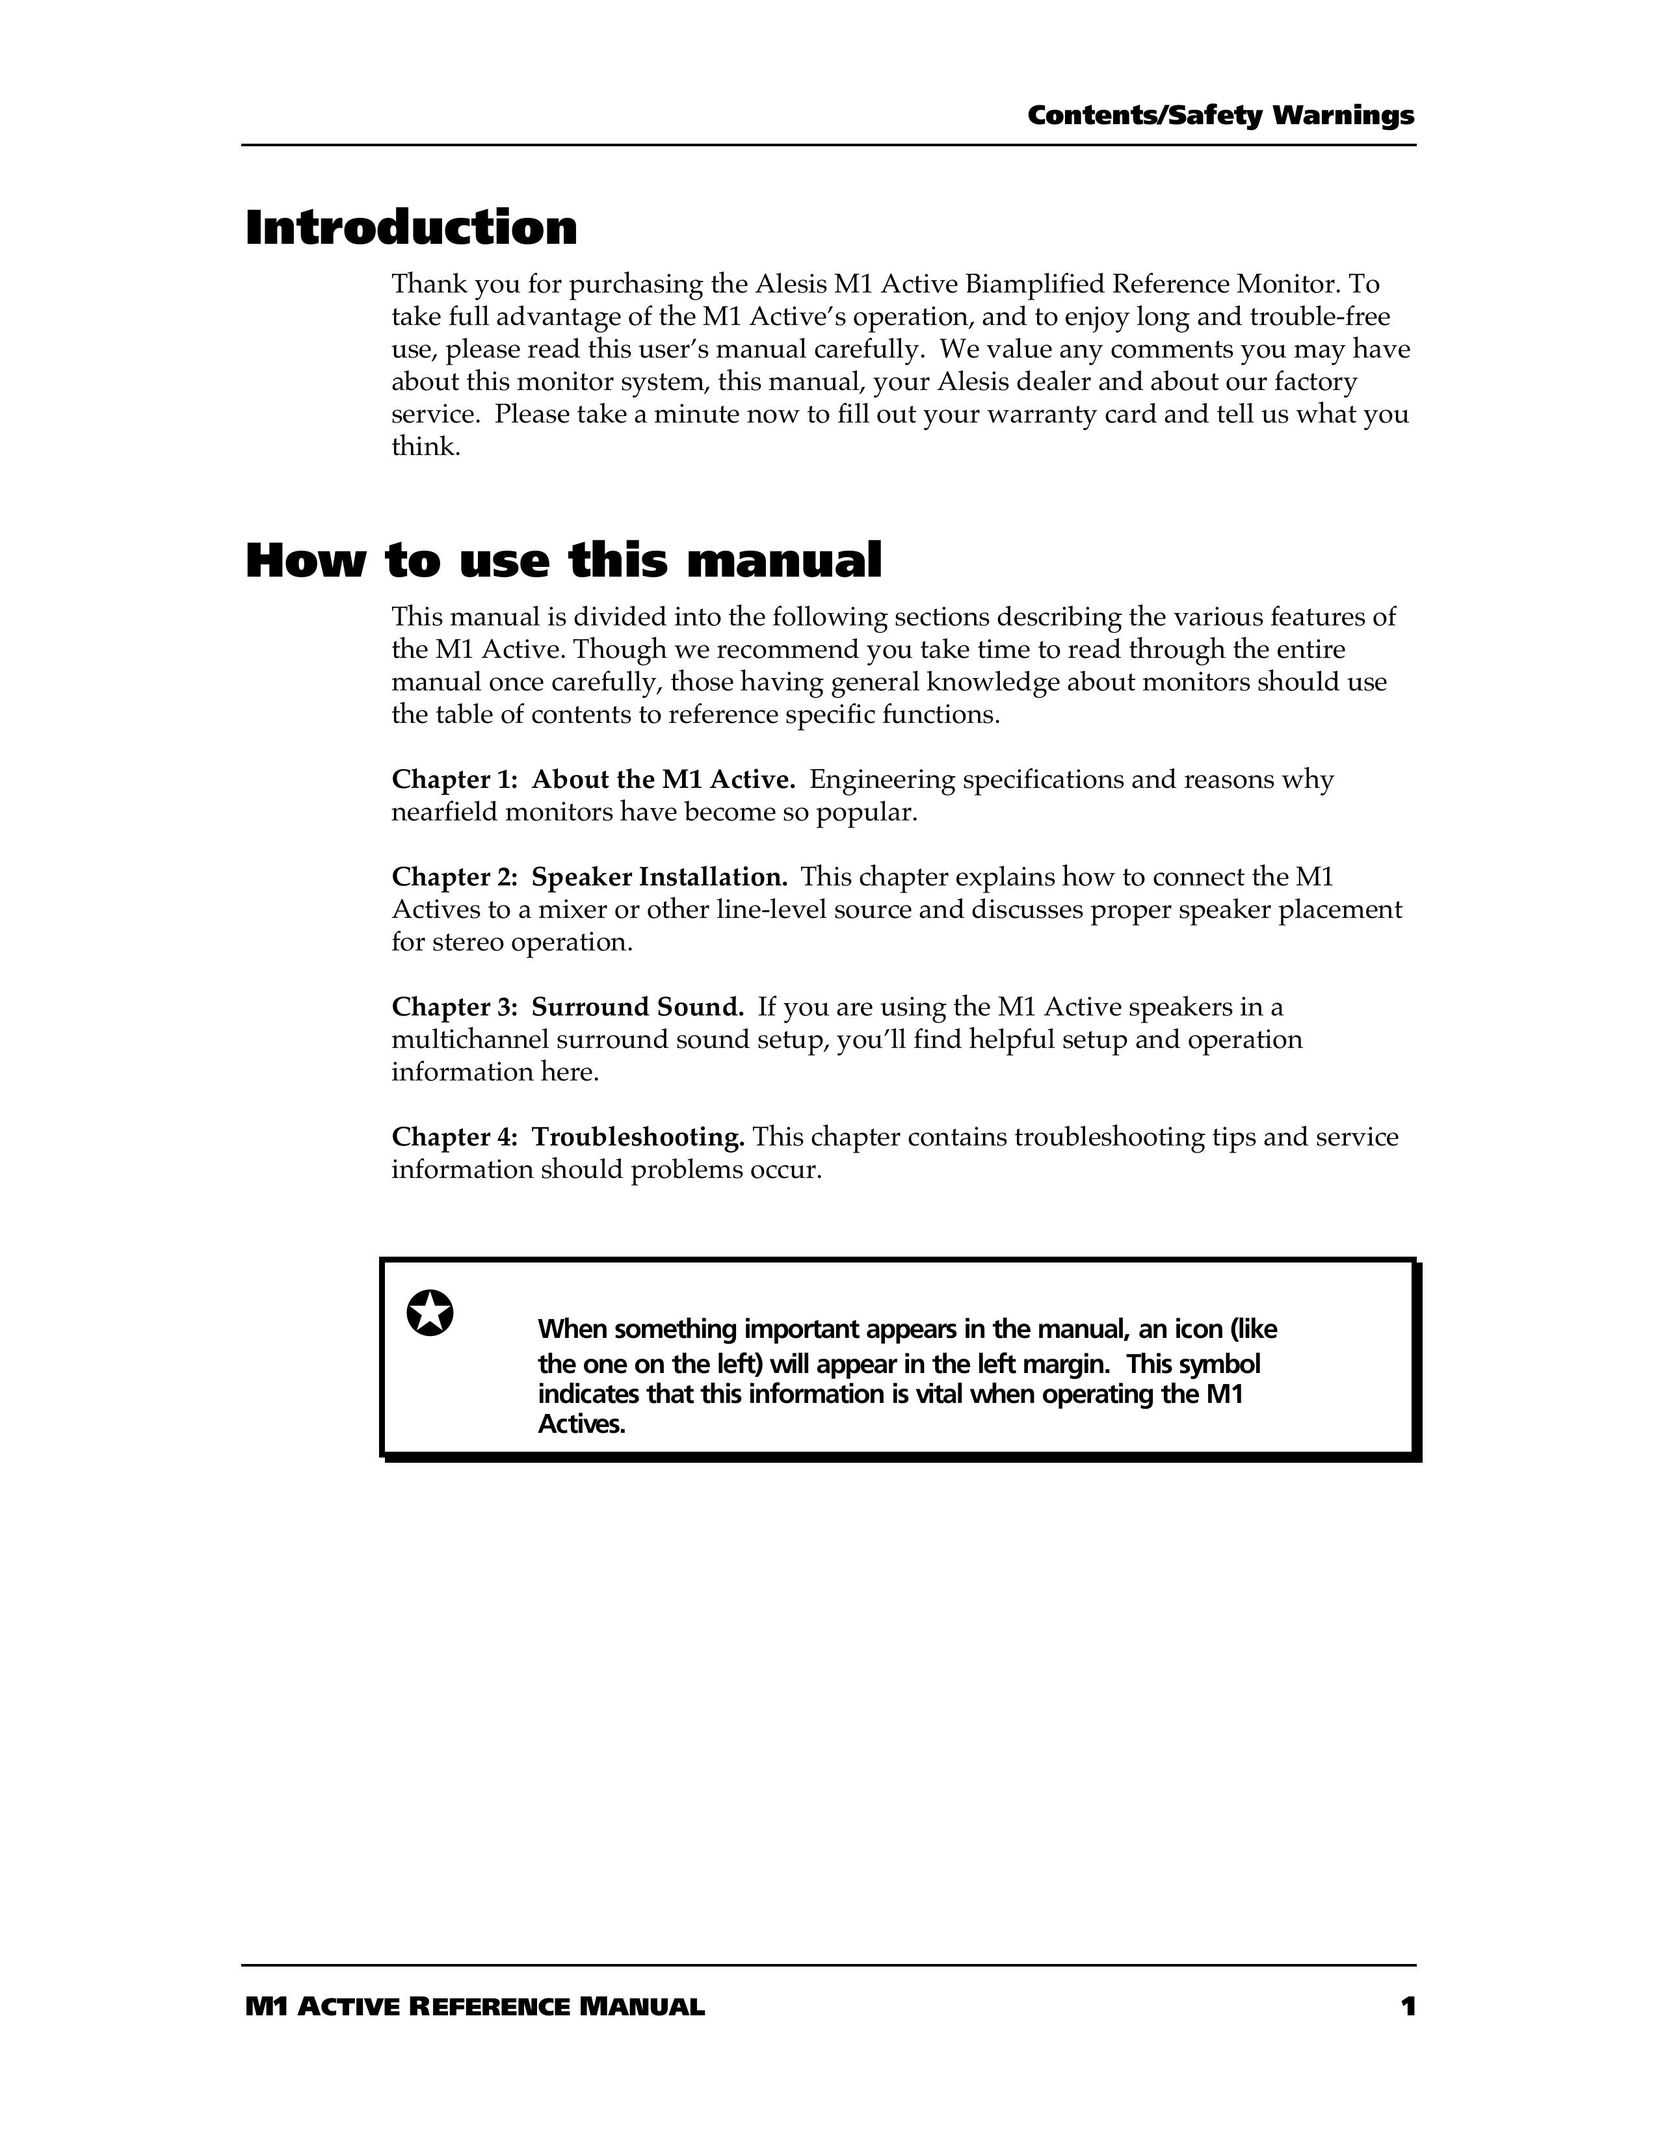 Alesis M1 Computer Monitor User Manual